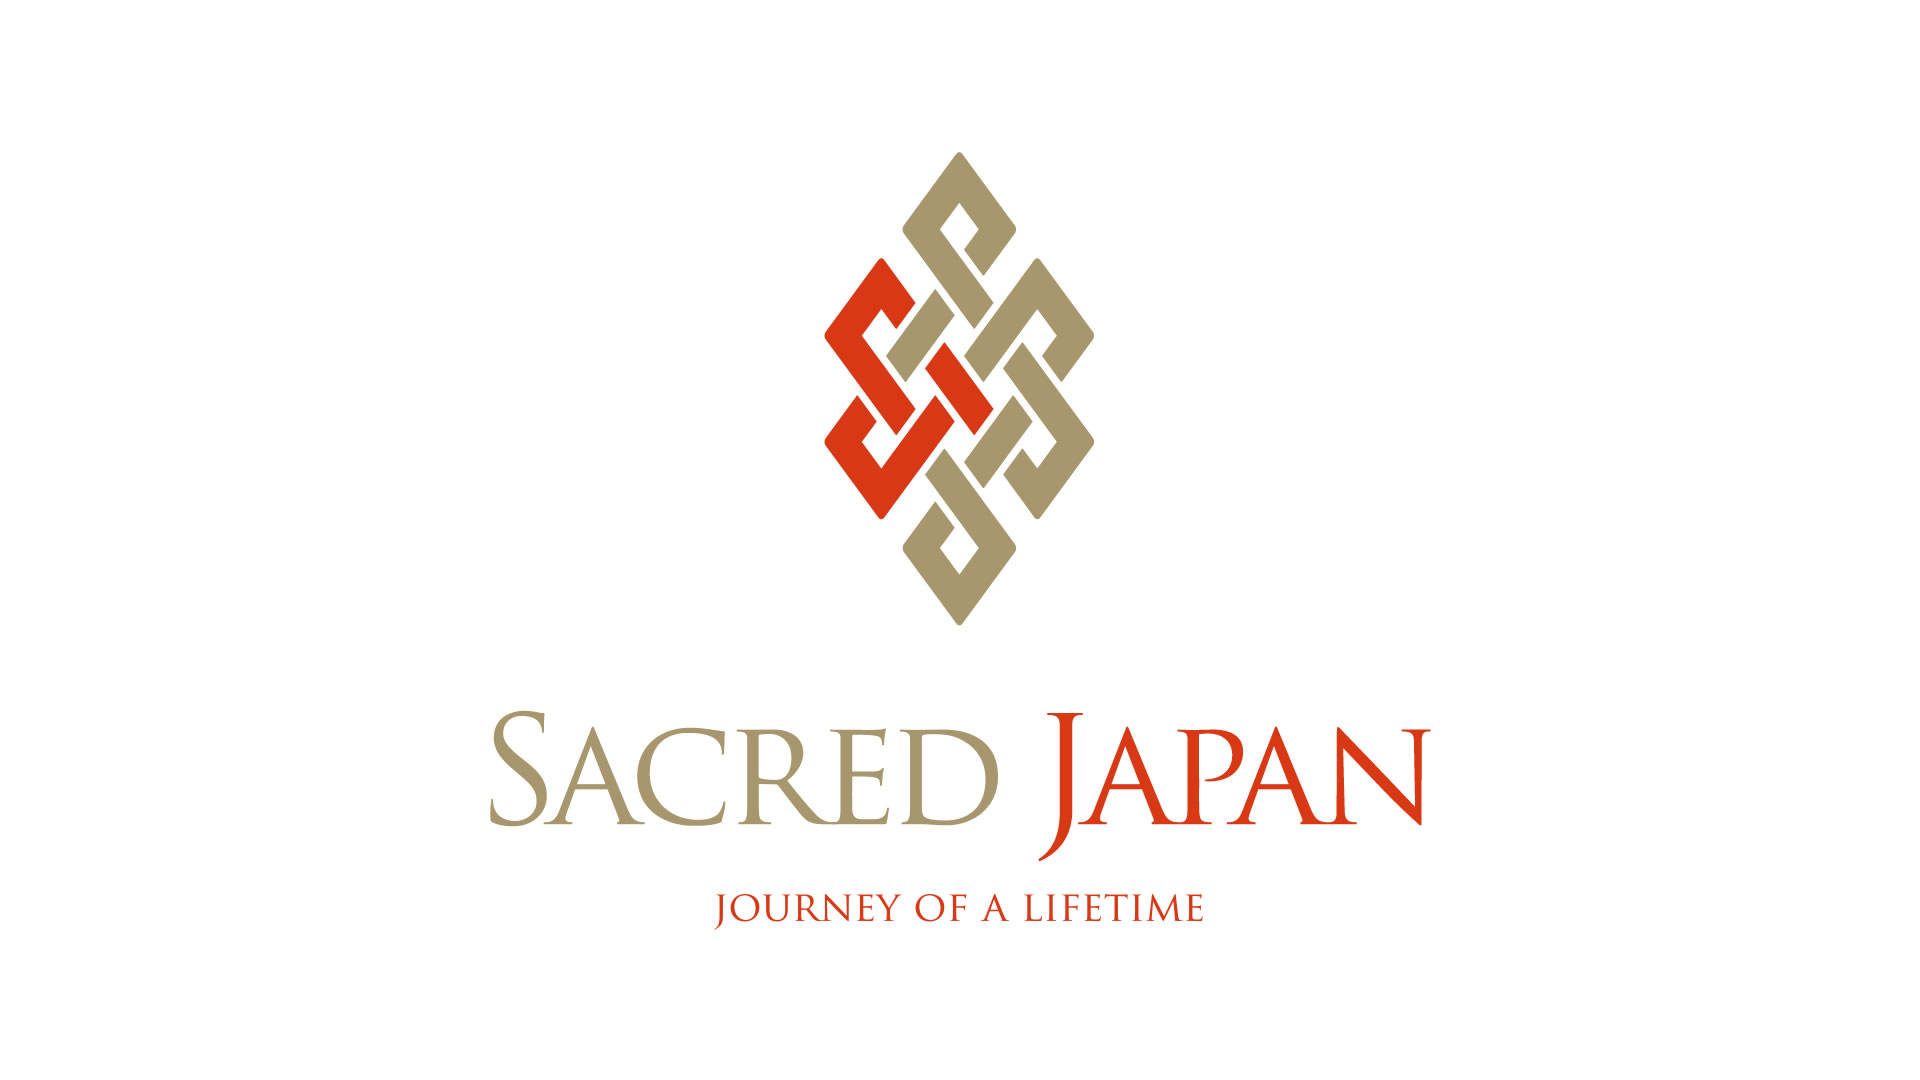 Works シンボルマーク ロゴタイプに Sacred Japan と Restaurante De